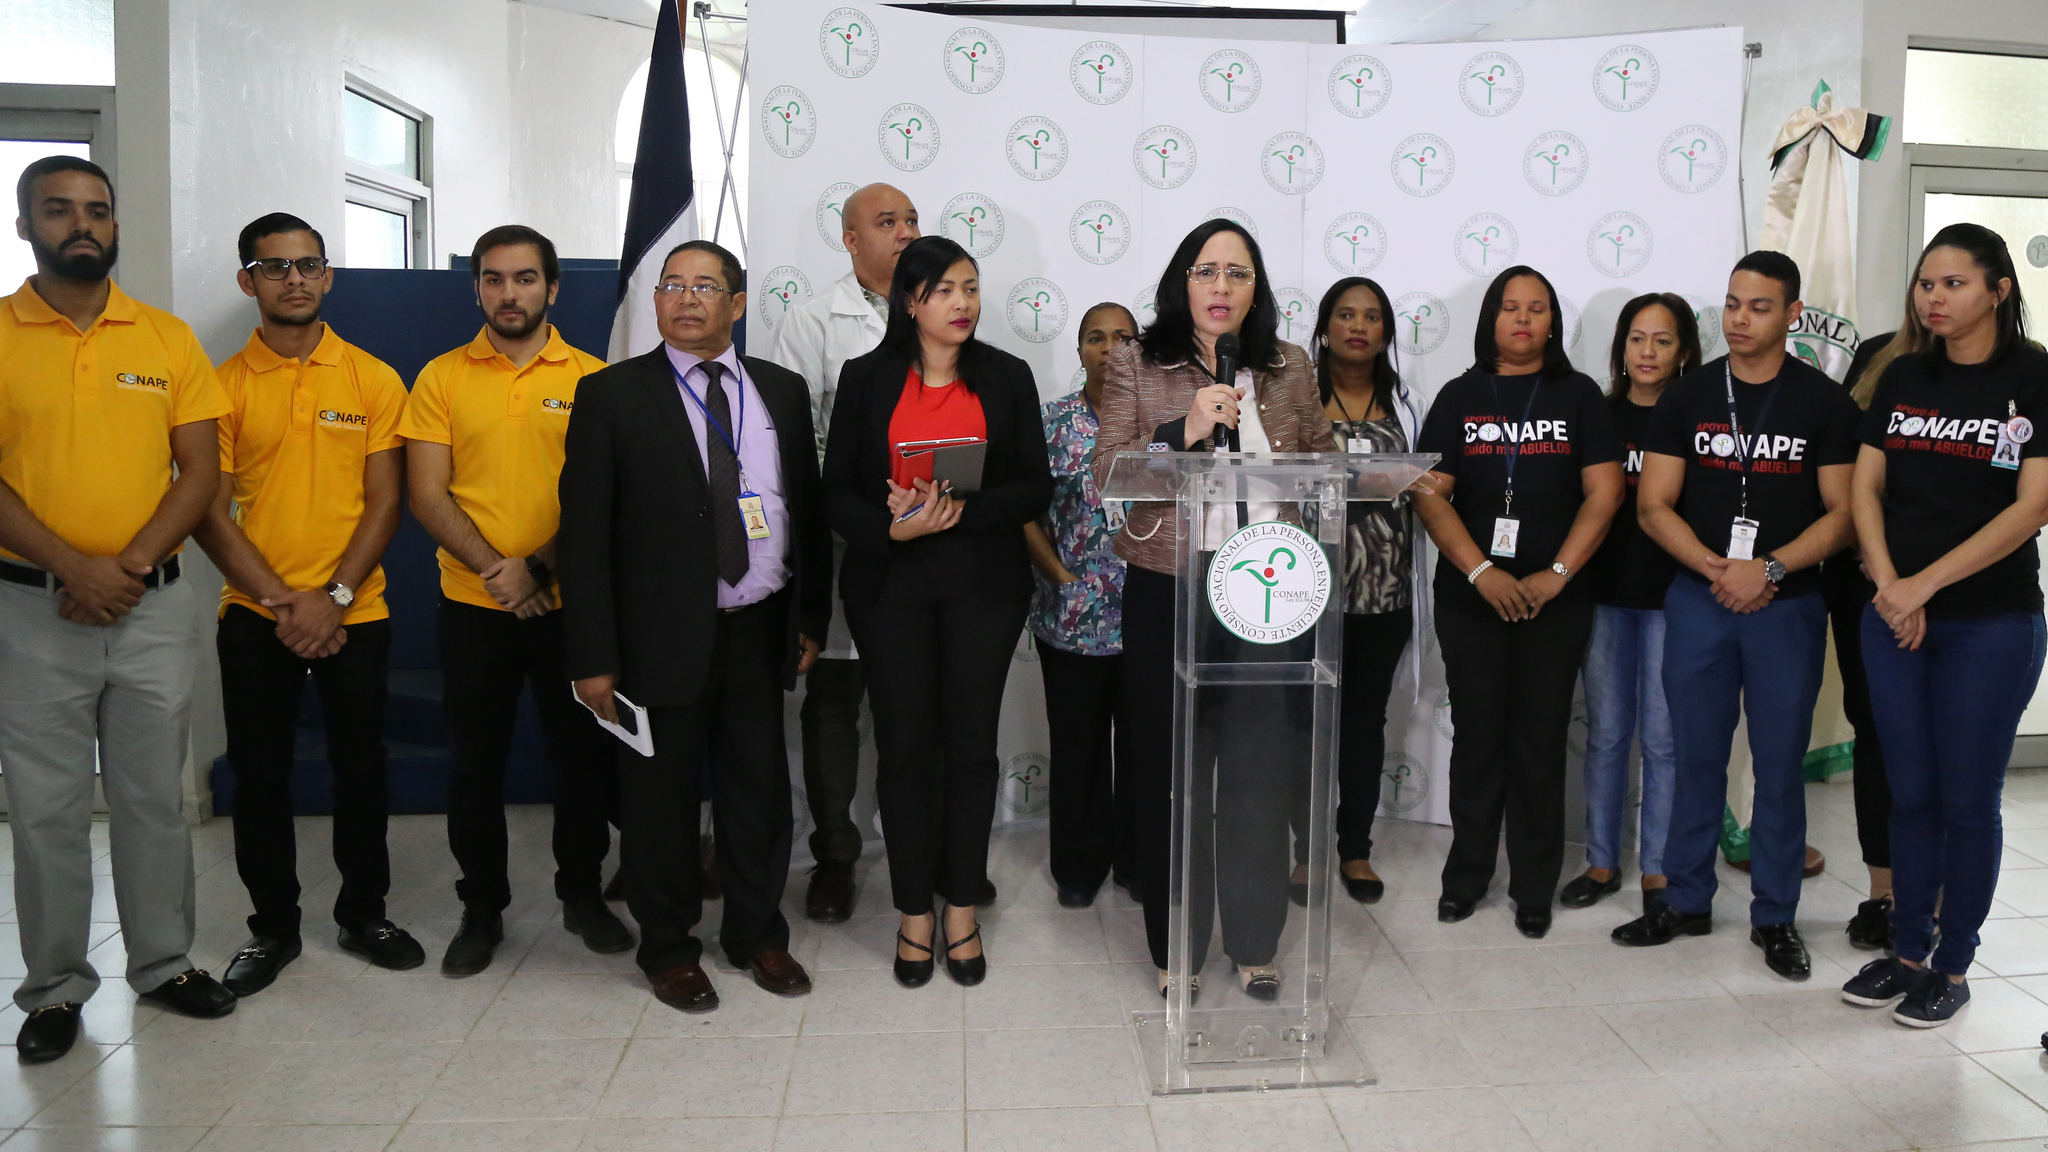 REPÚBLICA DOMINICANA: CONAPE inicia operativo Más cerca de ti para garantizar protección y seguridad a los adultos mayores en condiciones vulnerables